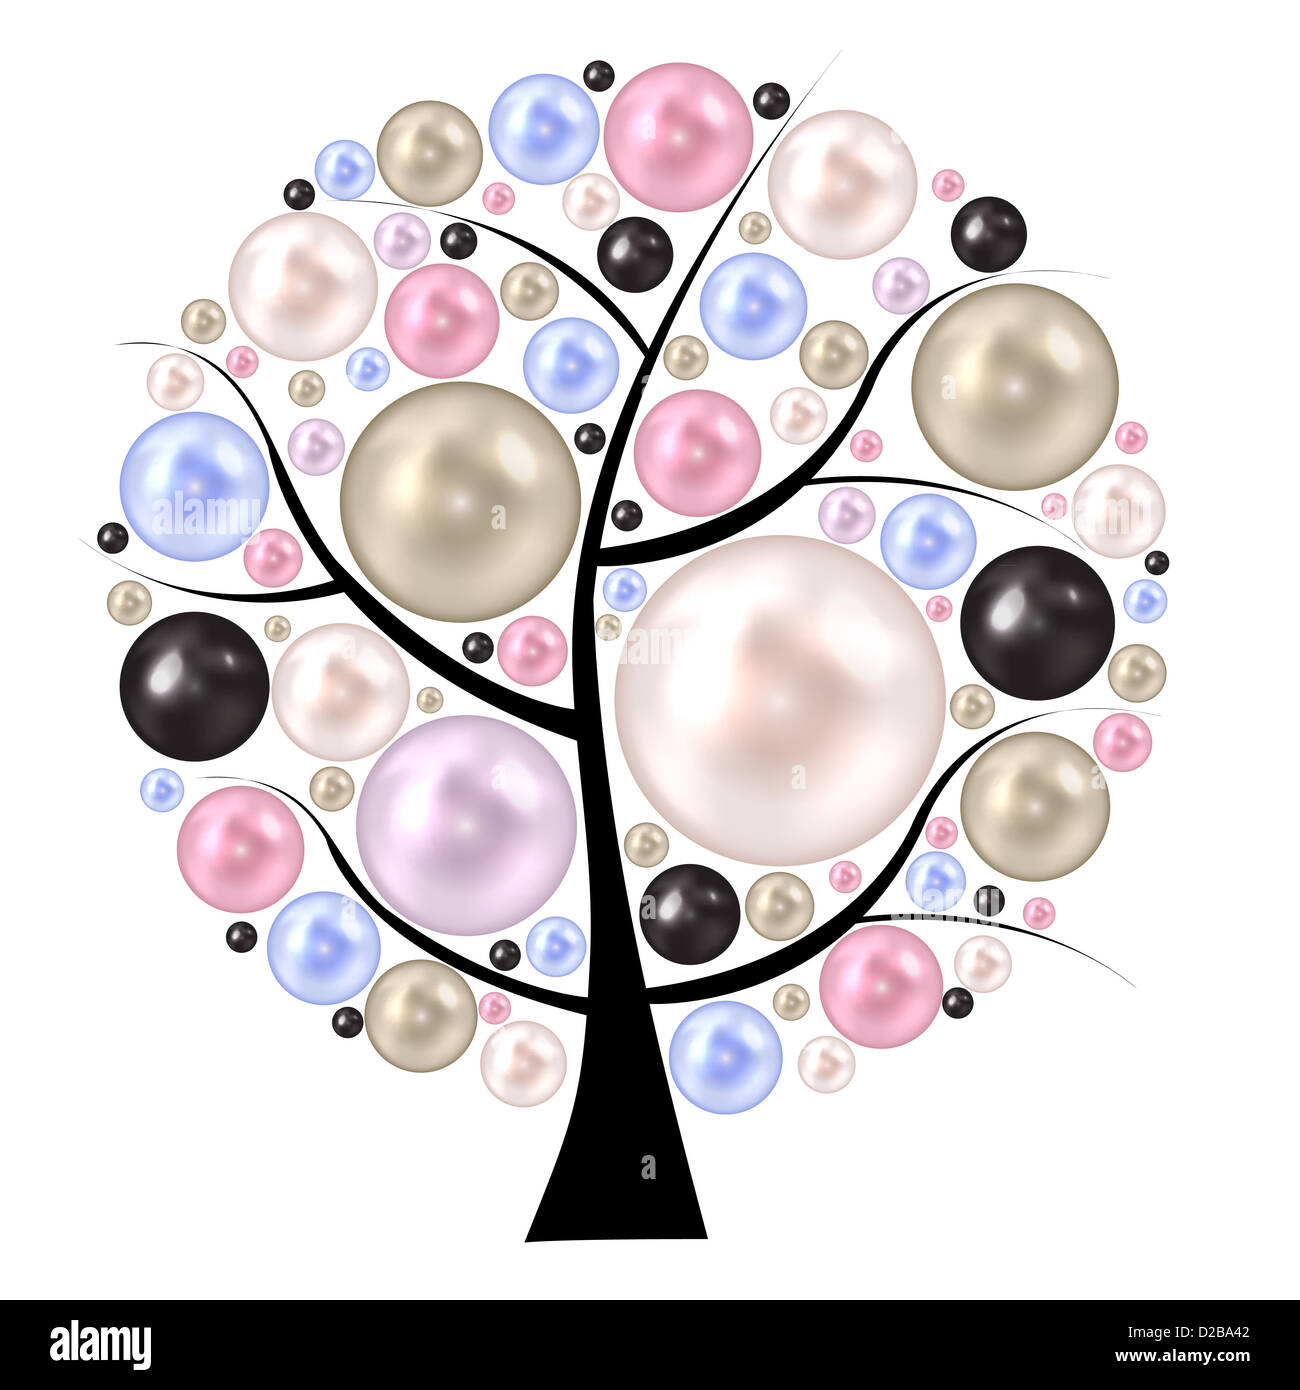 Beauty pearl on tree. background vector illustration. Stock Photo